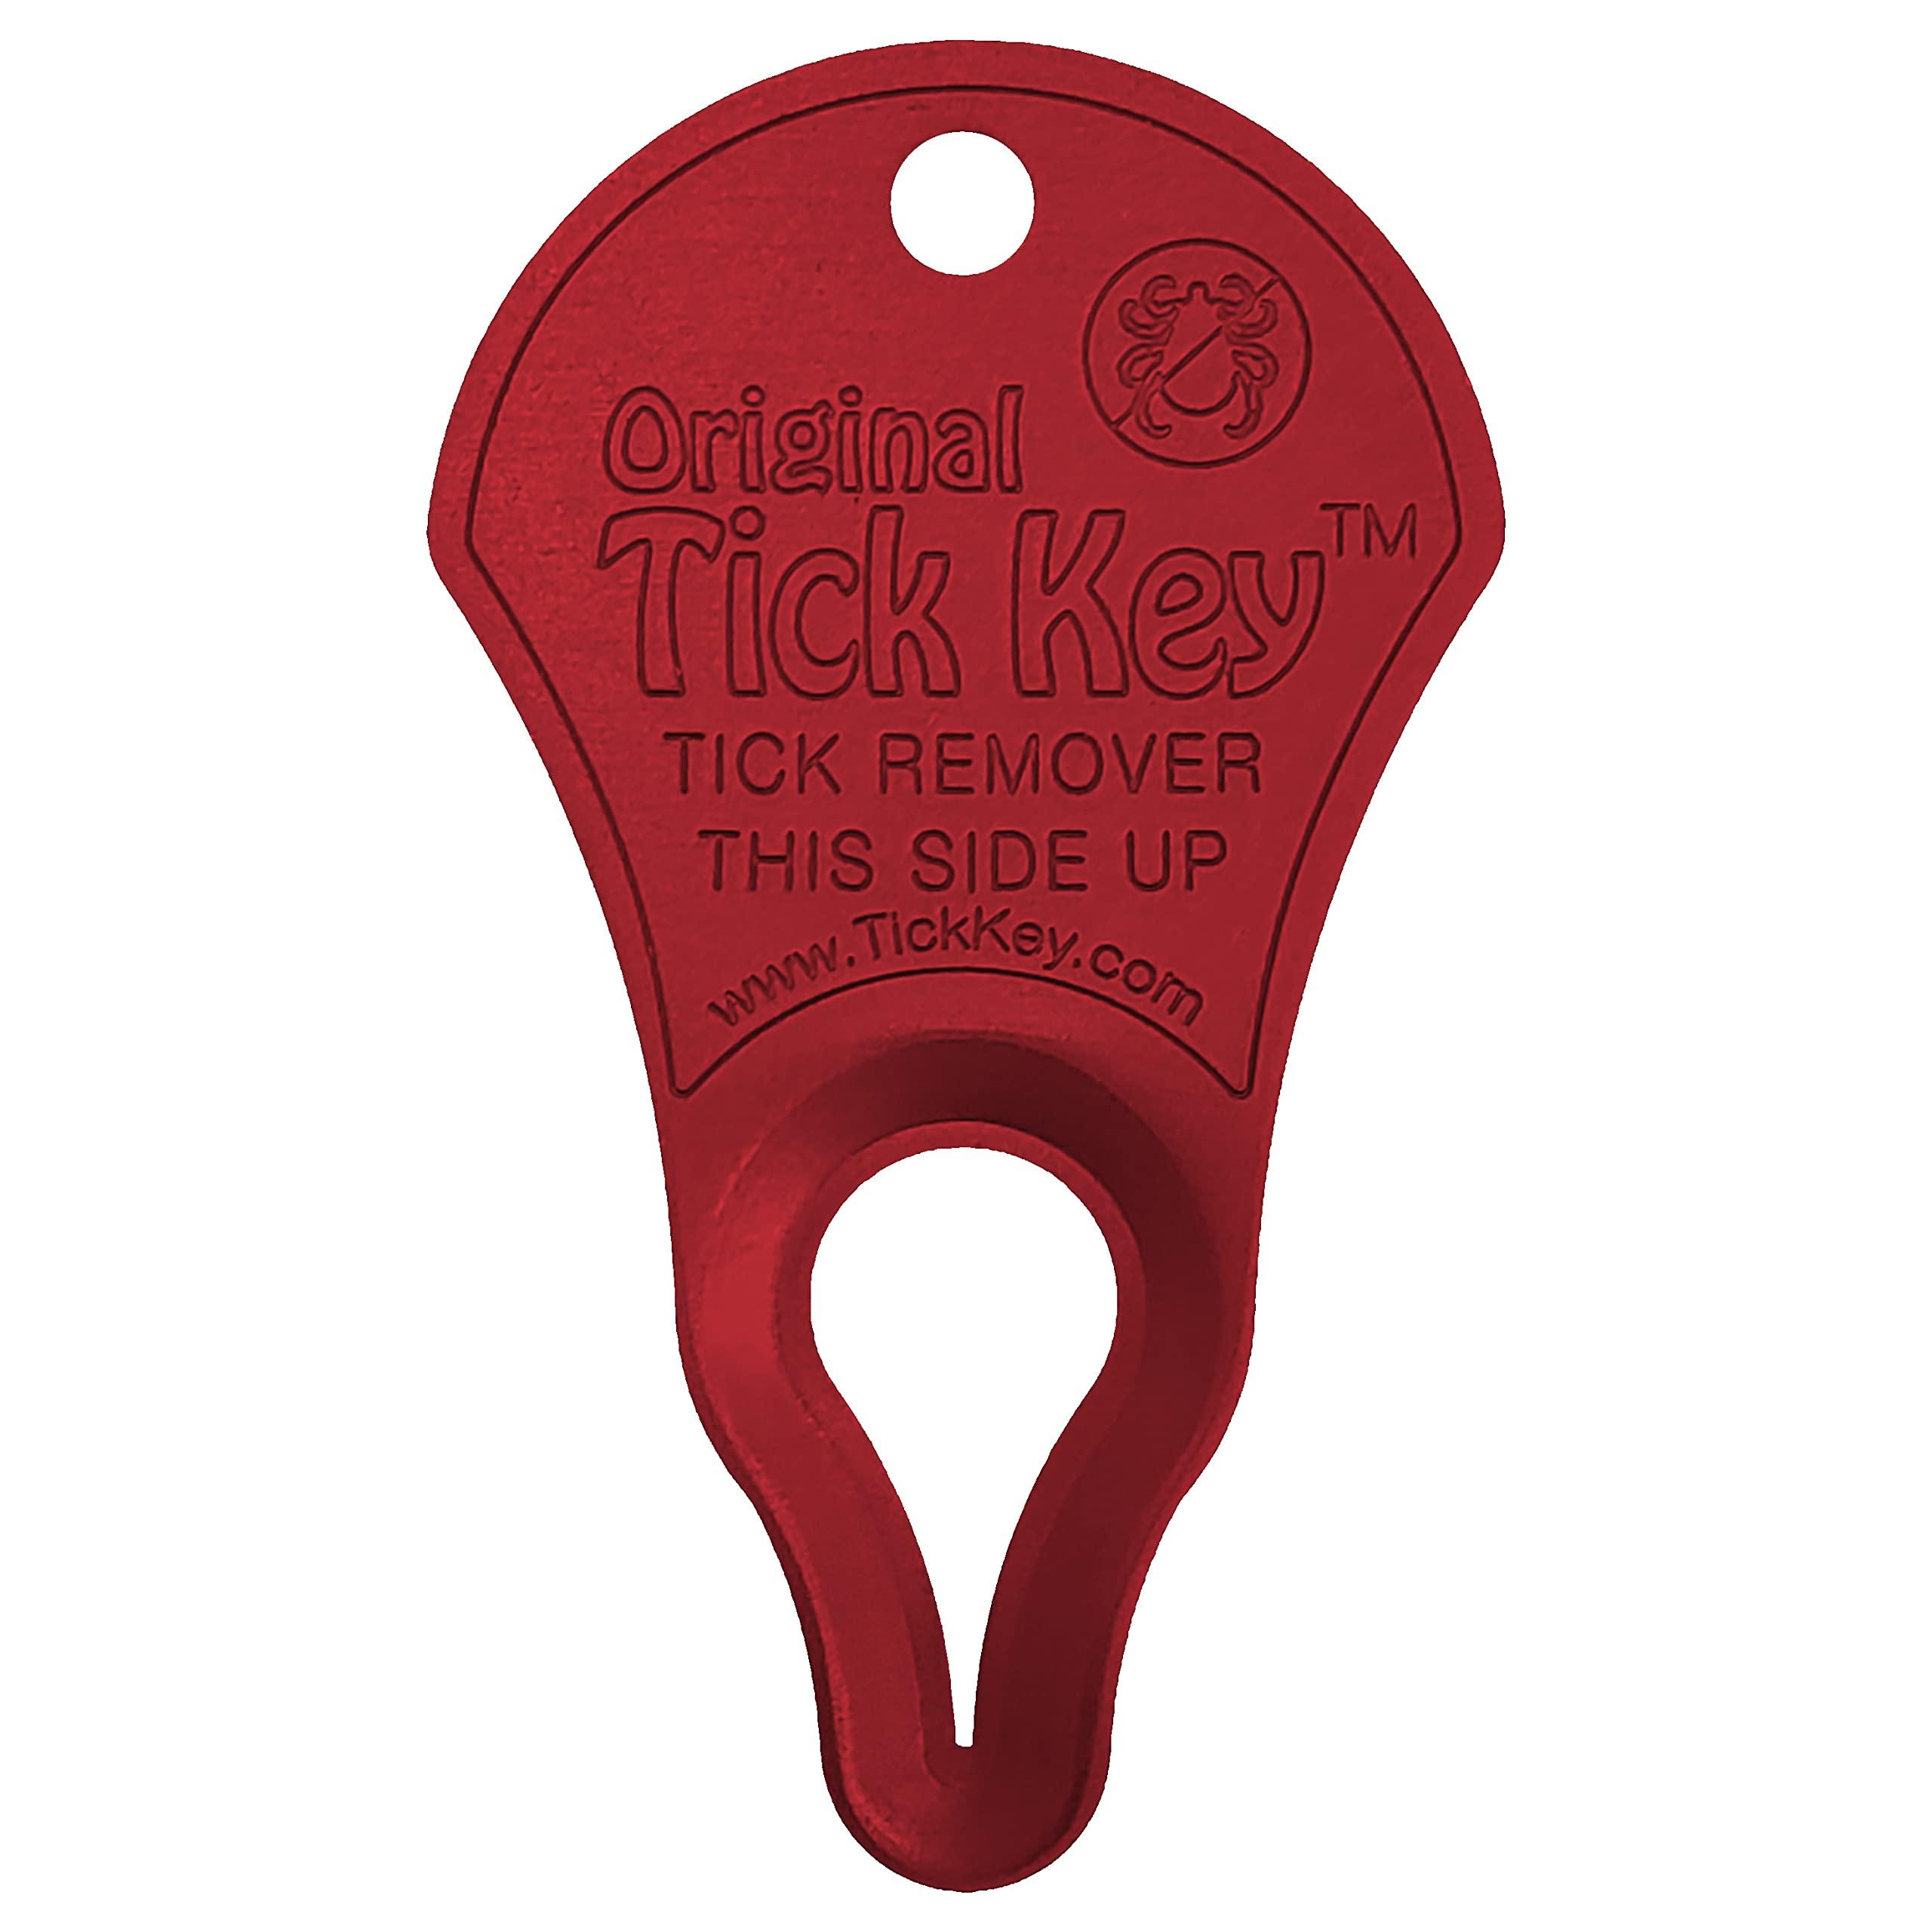 The Original Tick Key -Tick Detaching Device - Portable, Safe and Highly Effective Tick Detaching Tool (Assorted)